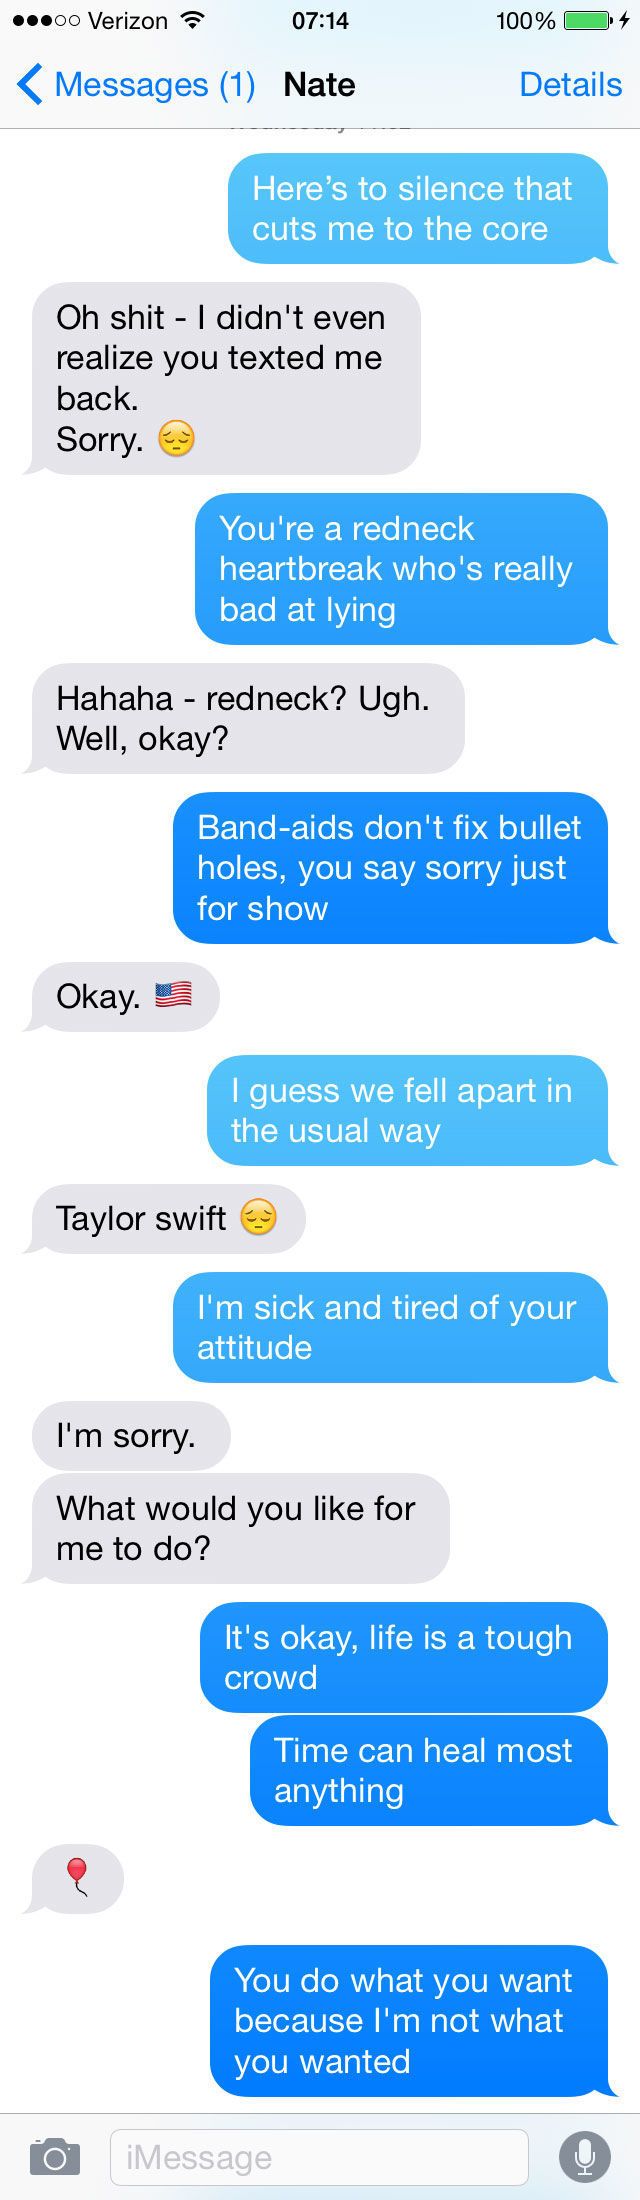 texting pranks to do on friends